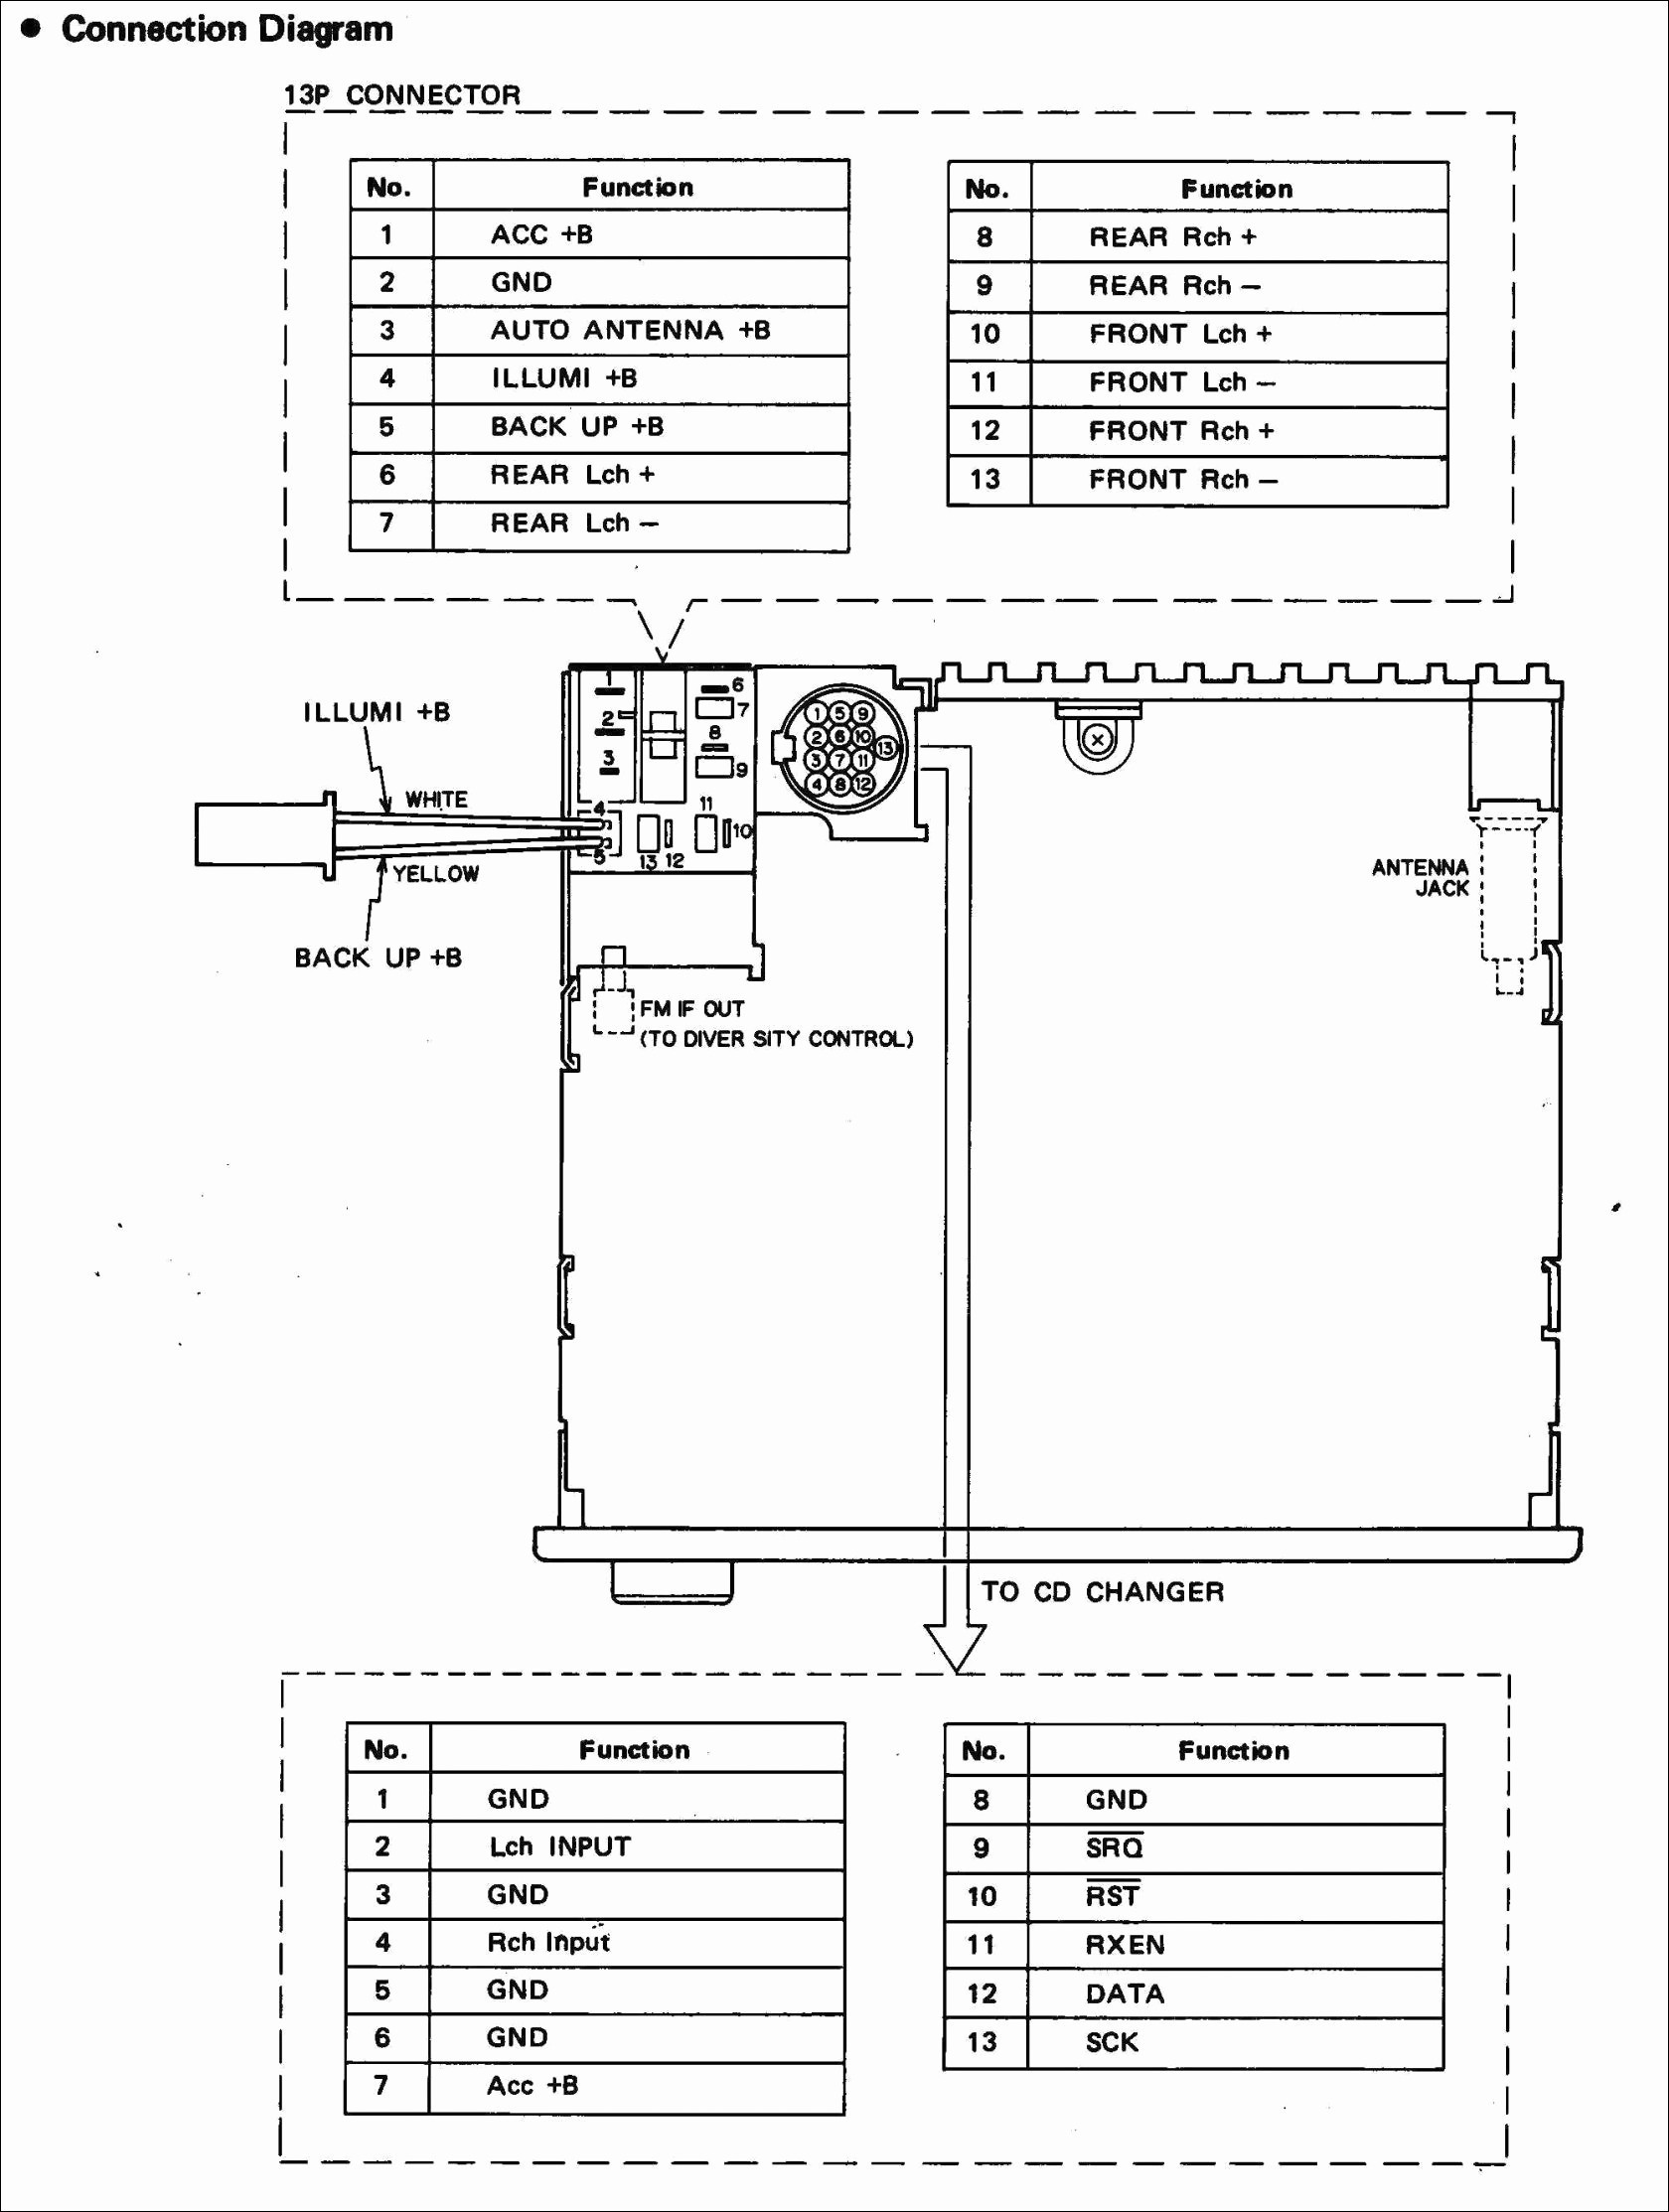 Fujitsu Ten Car Audio Wiring Diagram Fujitsu Inverter Wiring Diagram New Fujitsu Inverter Wiring Diagram Of Fujitsu Ten Car Audio Wiring Diagram